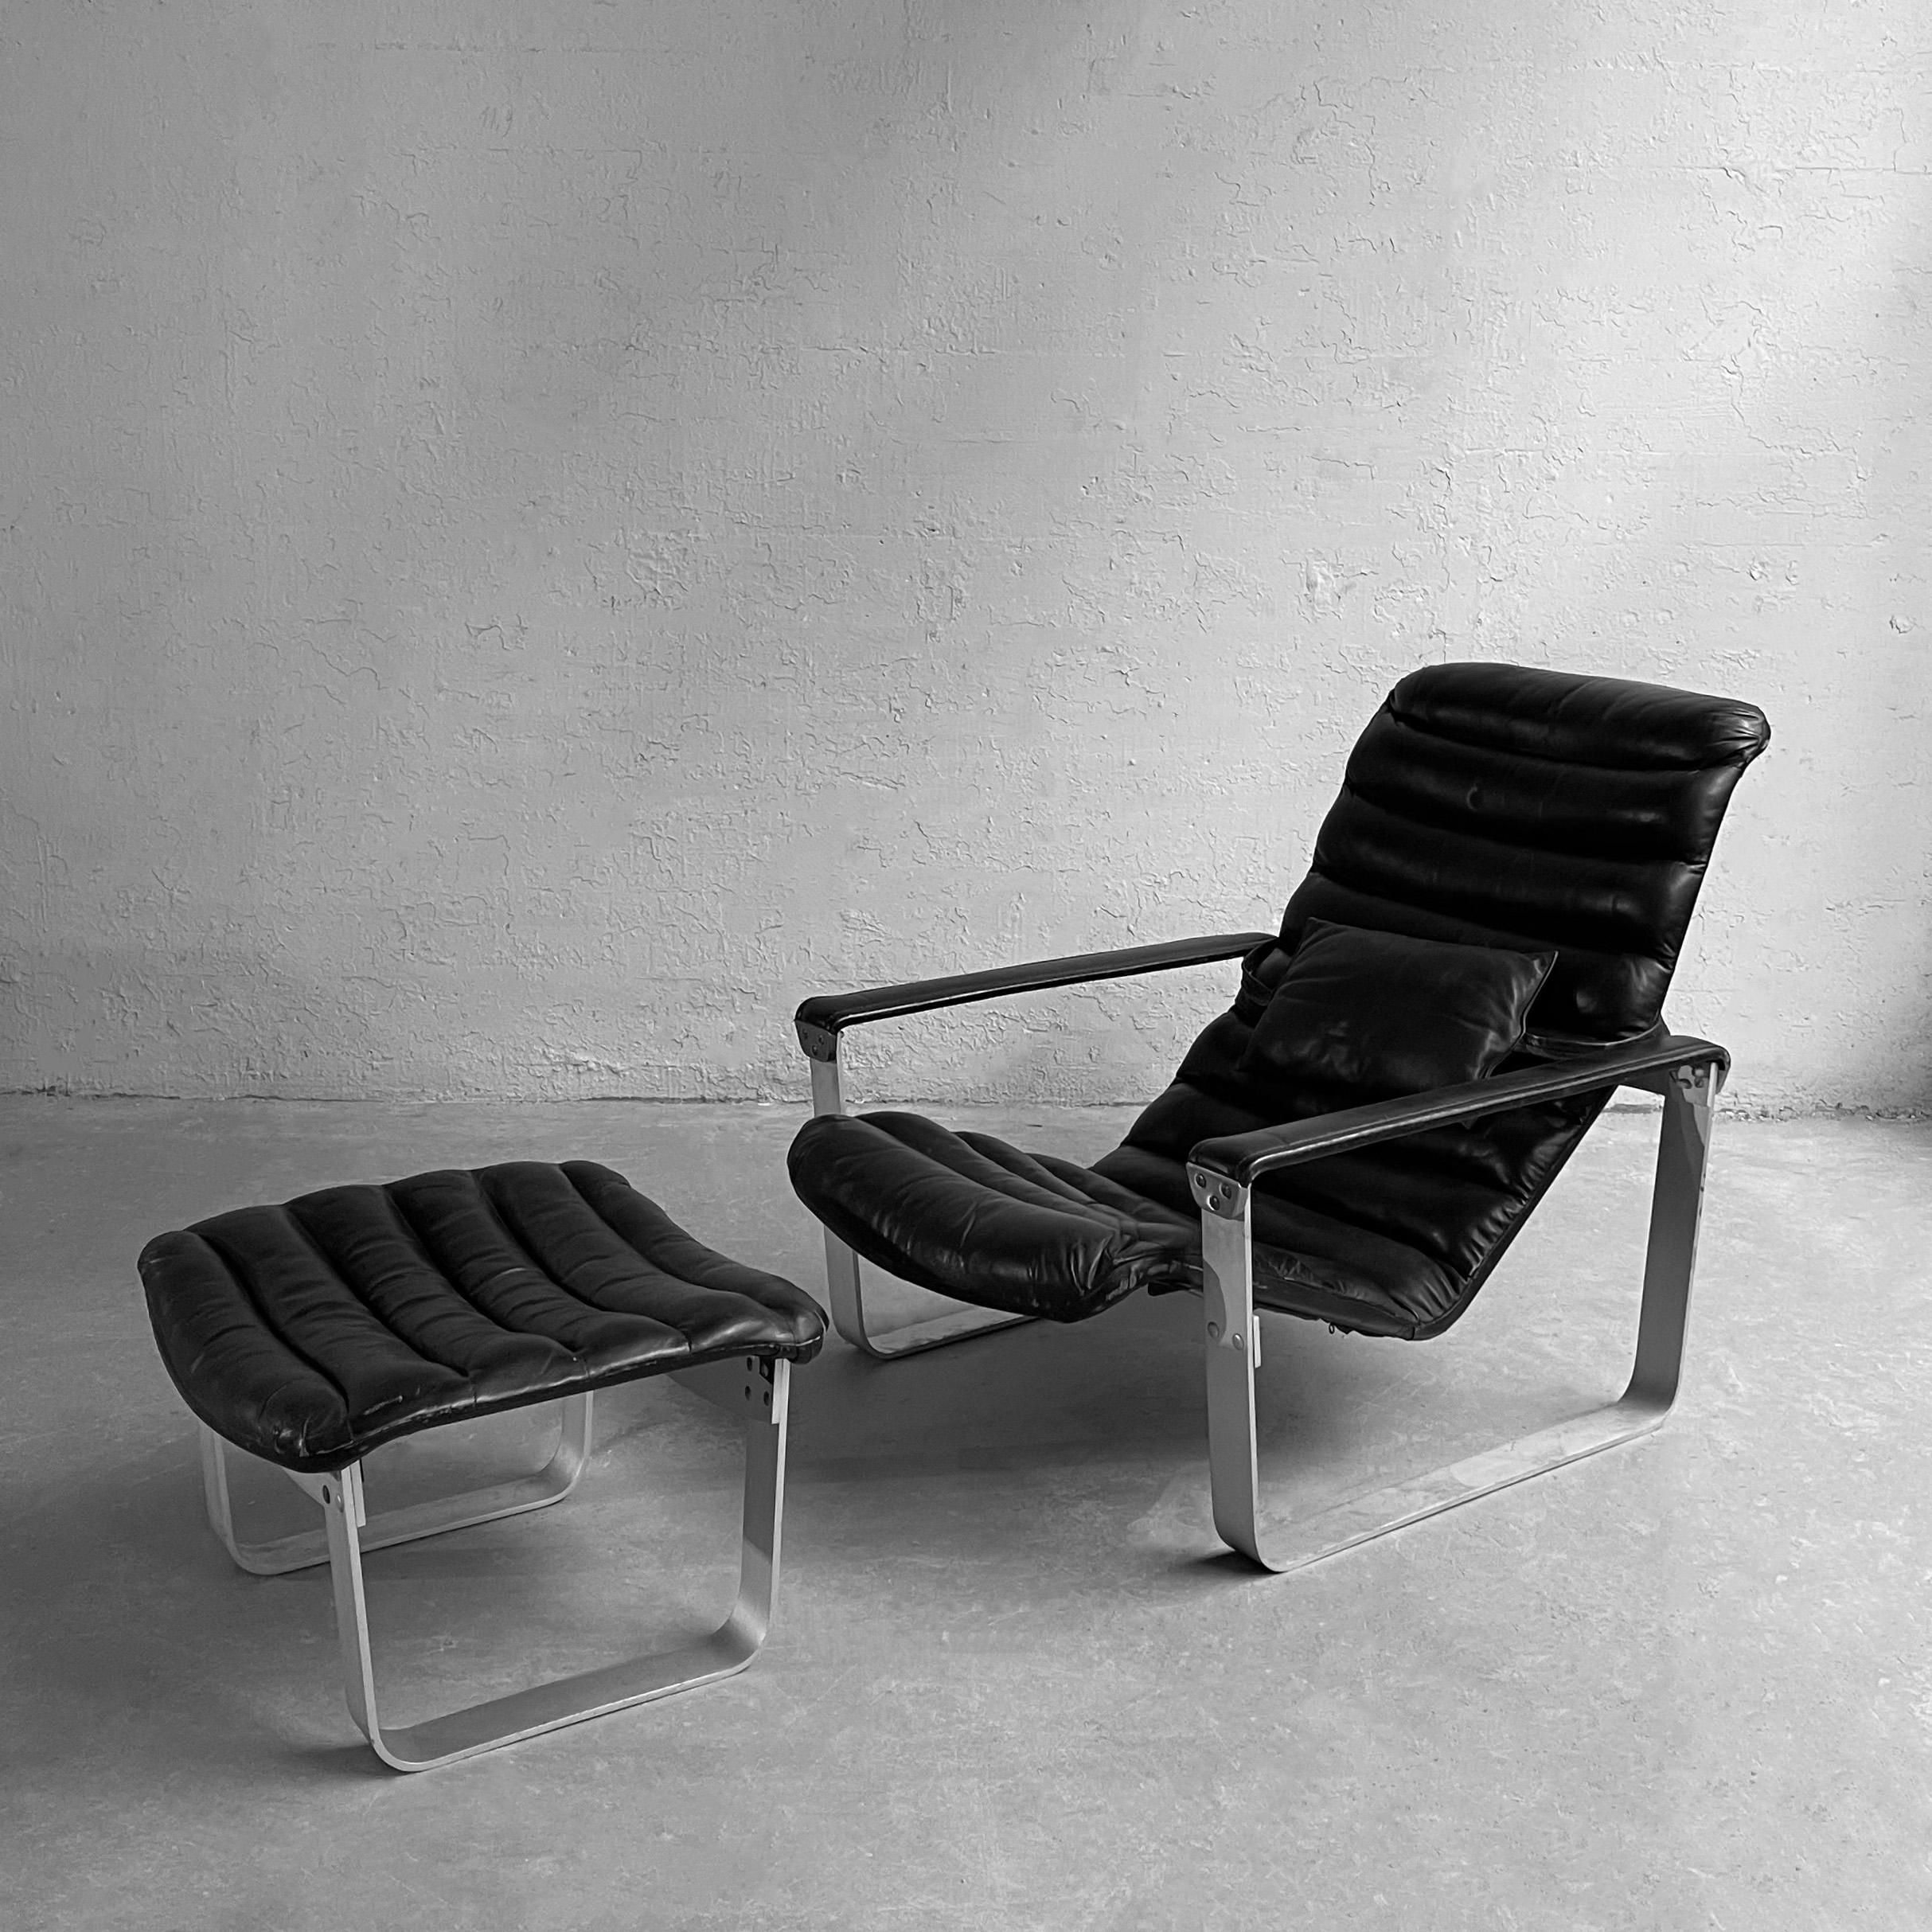 Der elegante, skandinavisch-moderne Sessel Pulkka